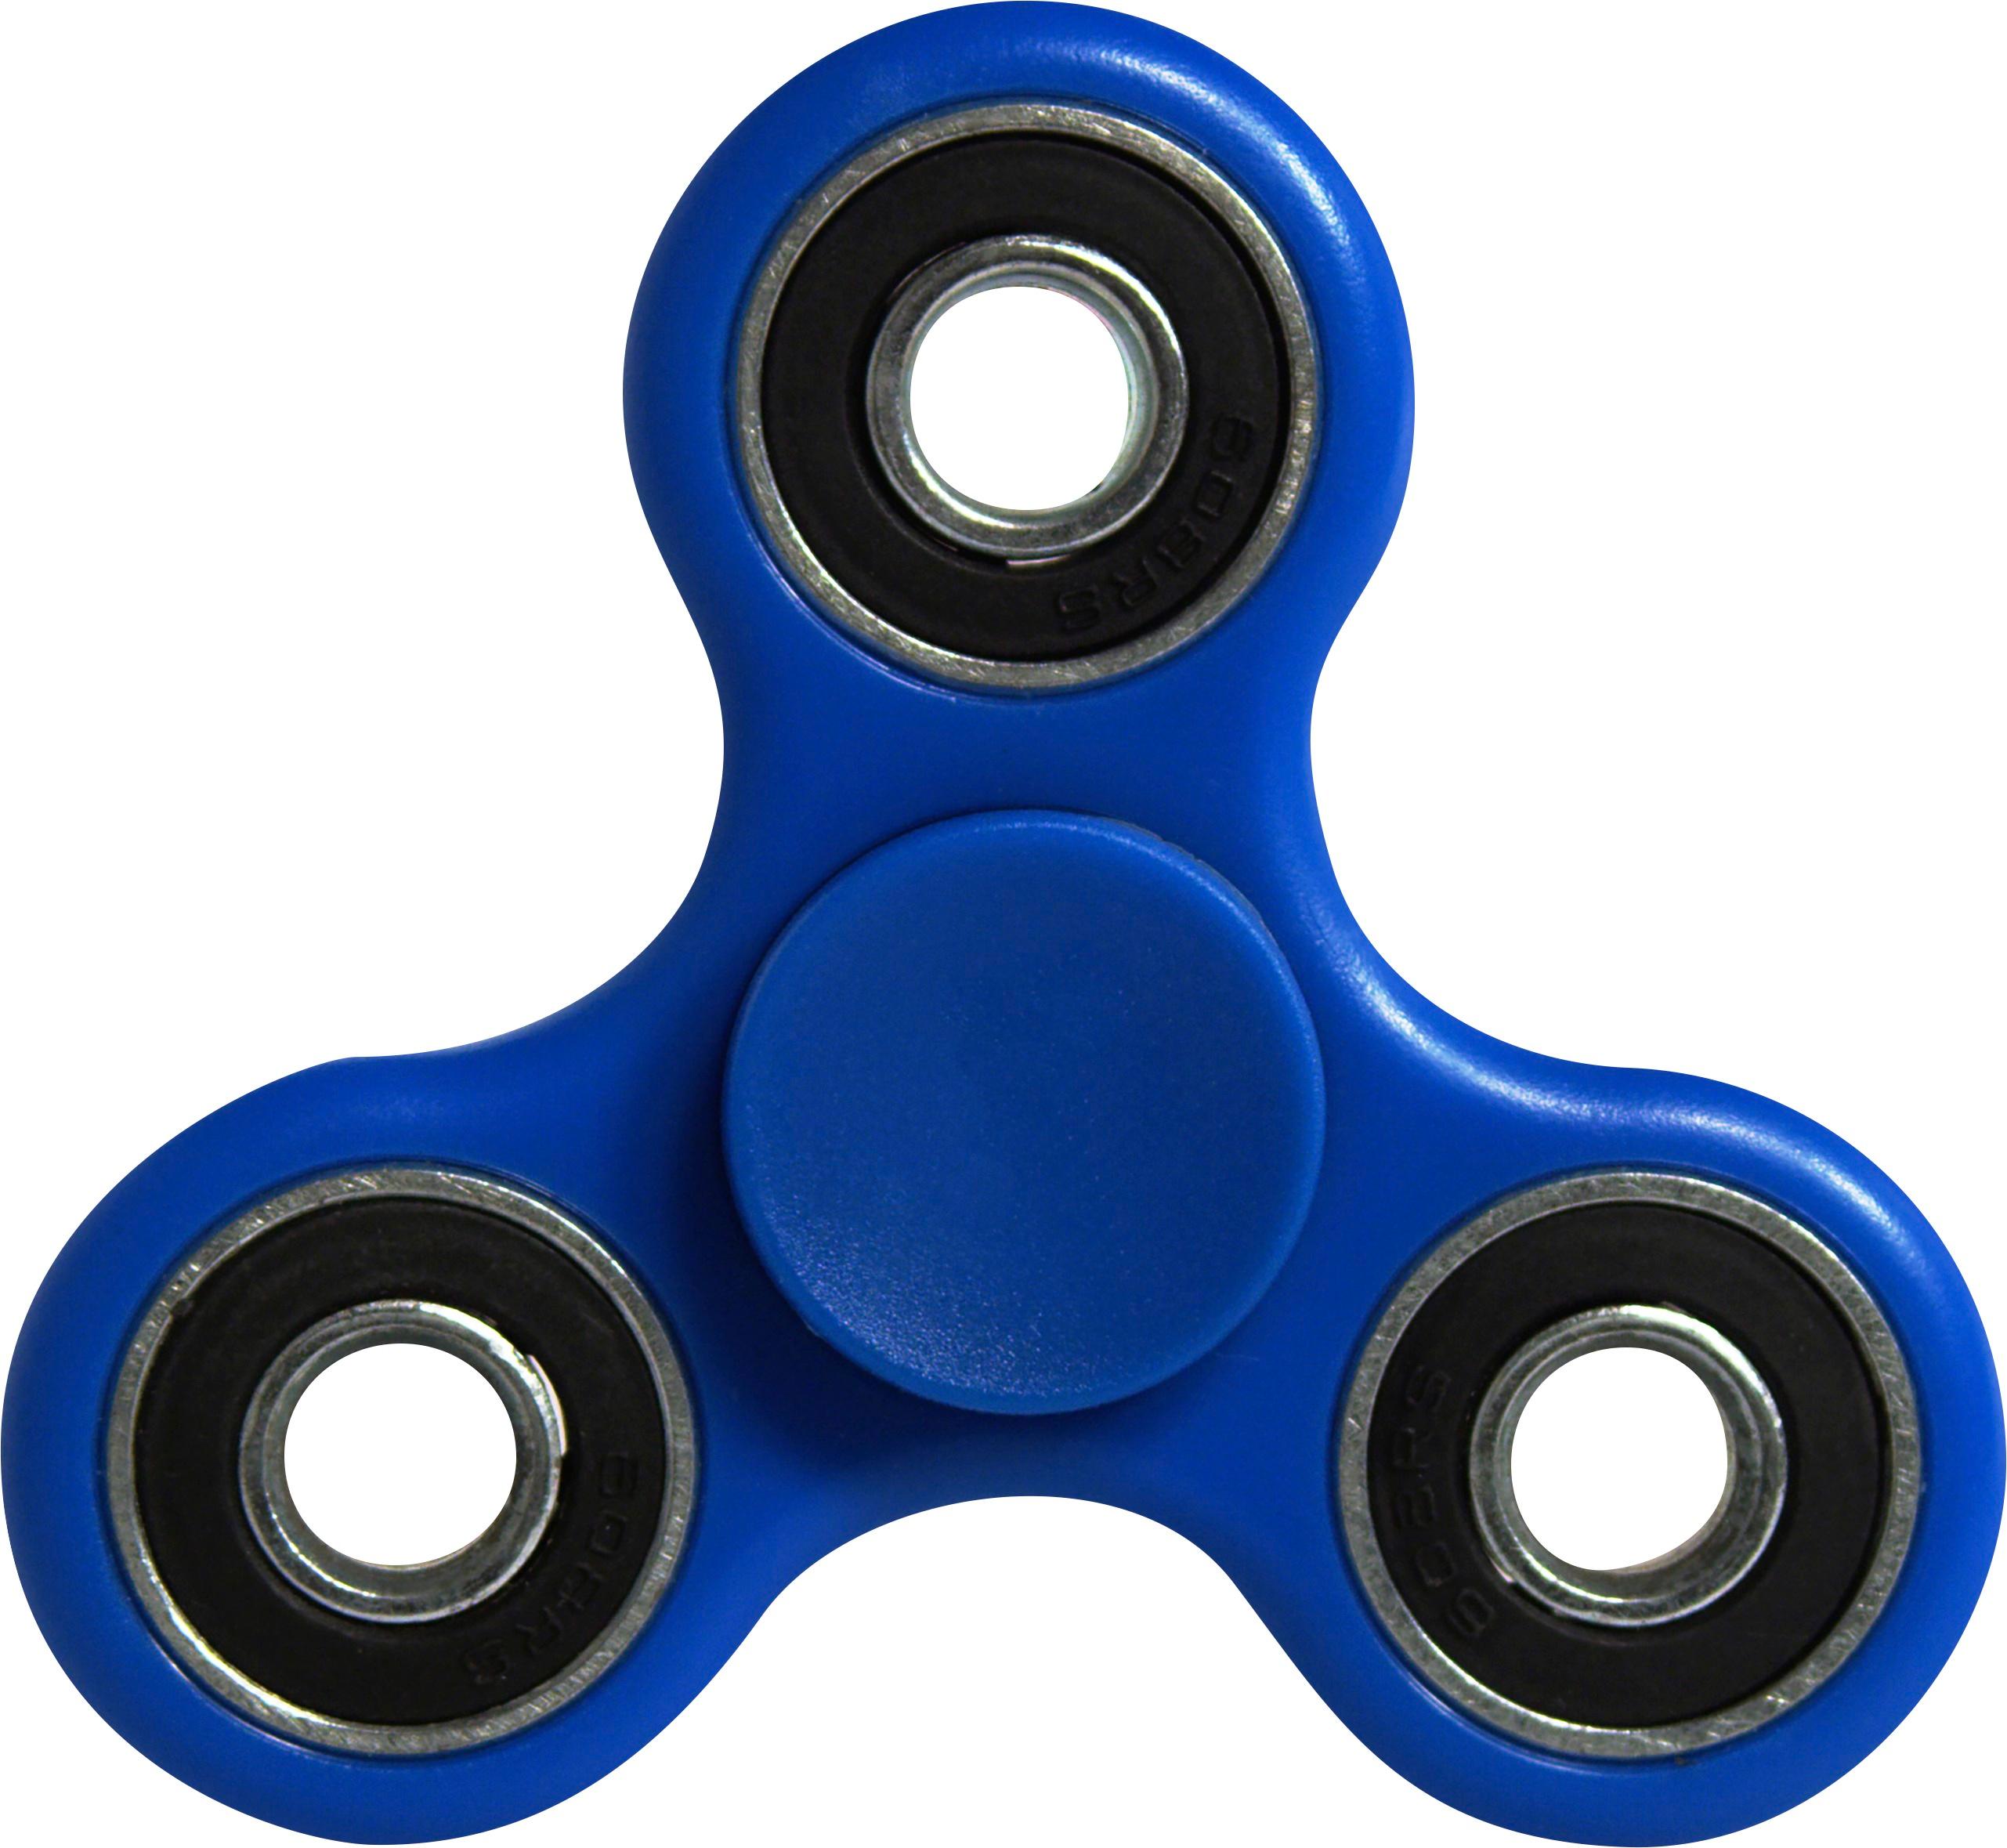 Fidgetly Spinner Toy Stress Reducer Blue/Black 5006 - Best